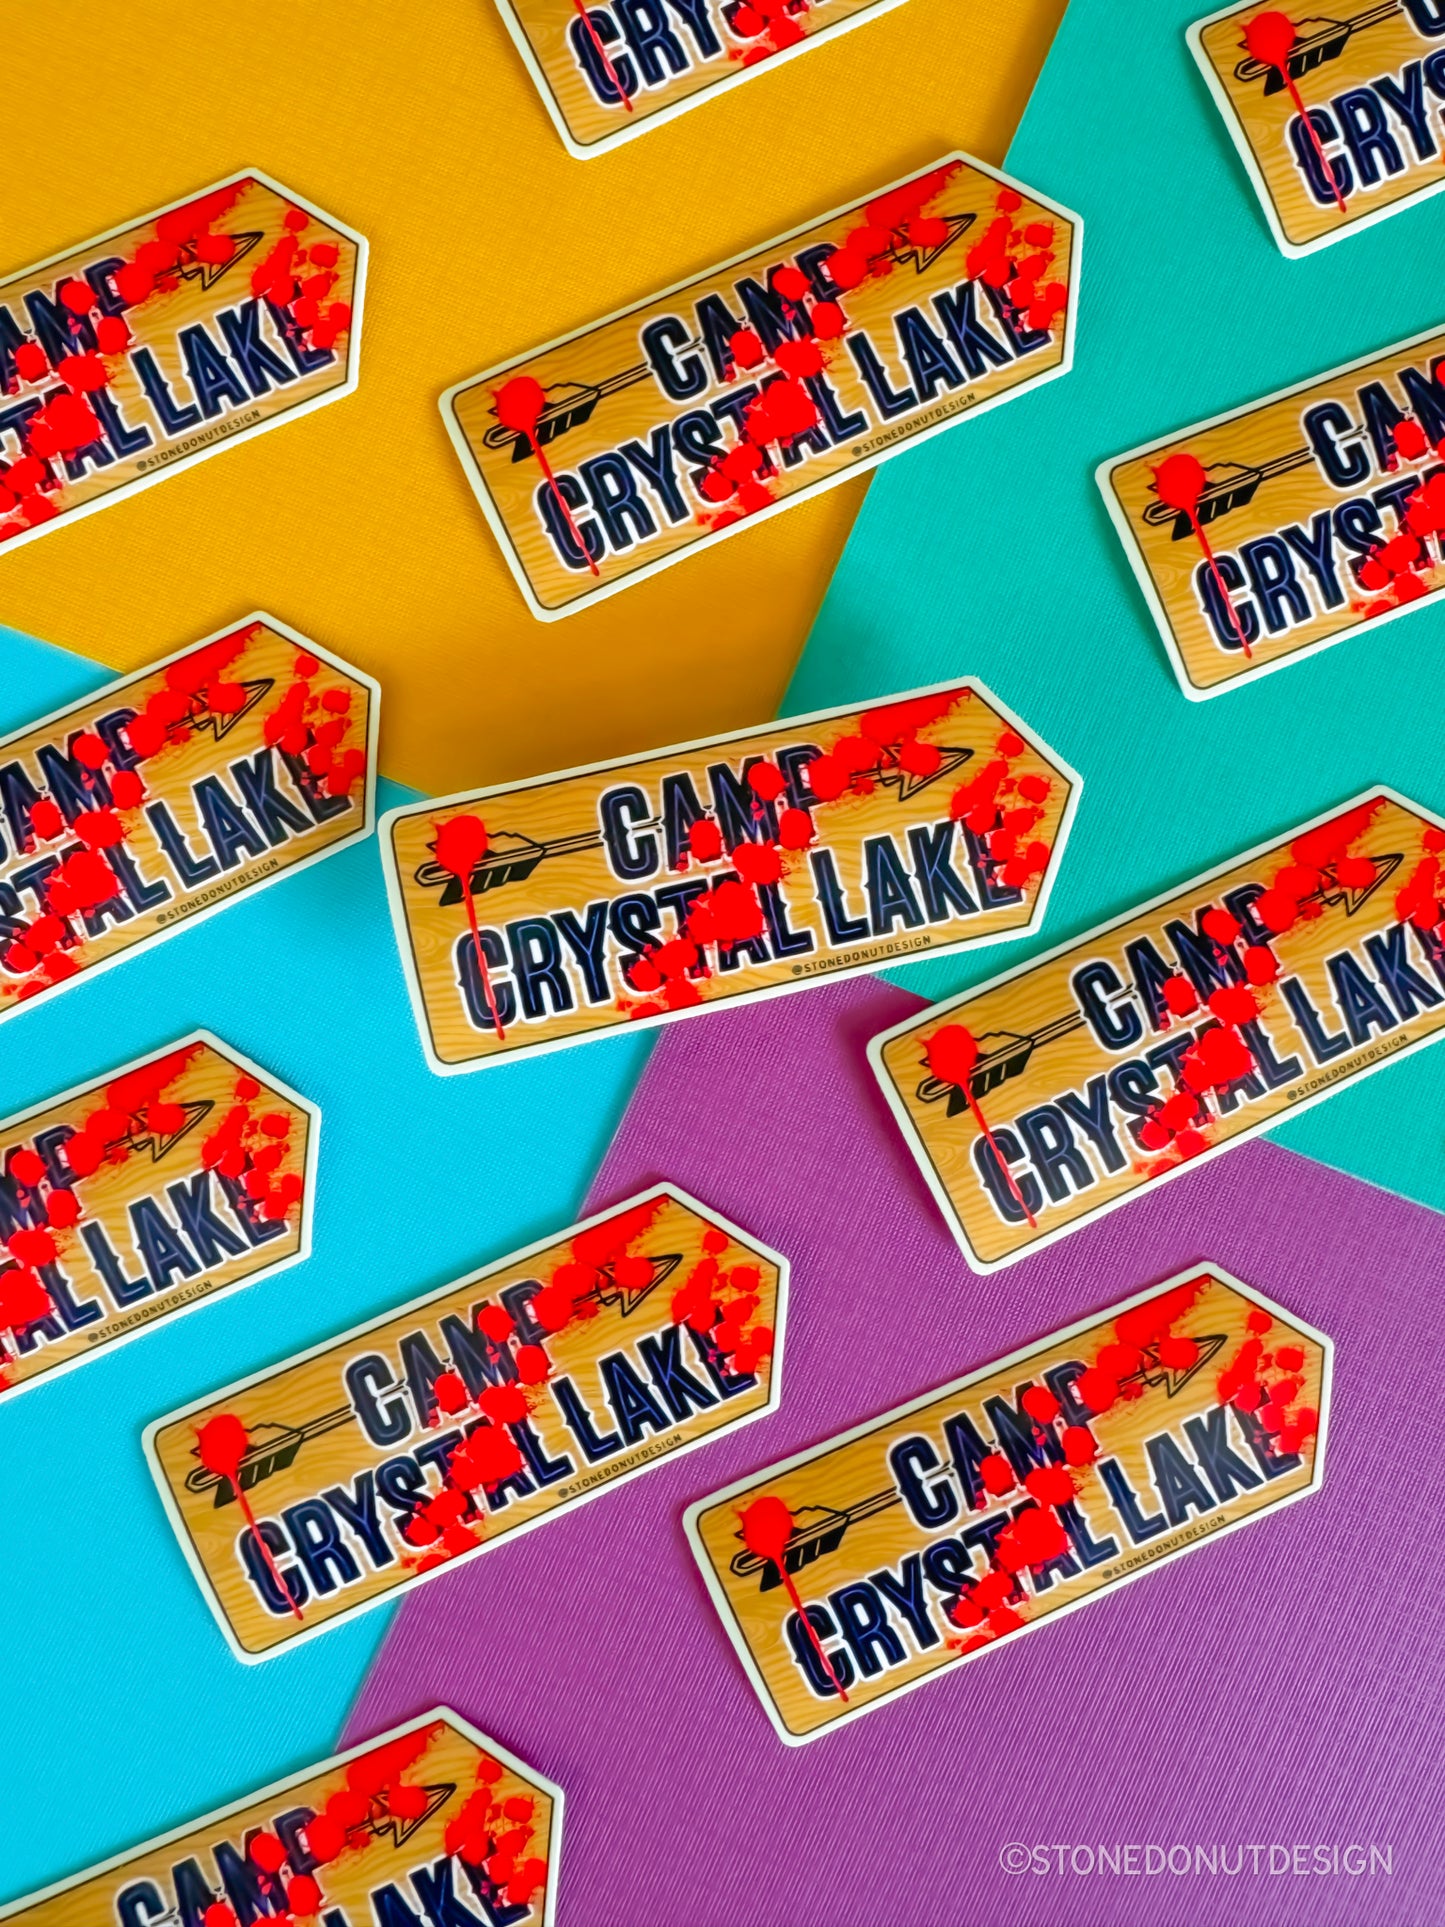 Camp Crystal Lake Vinyl Sticker